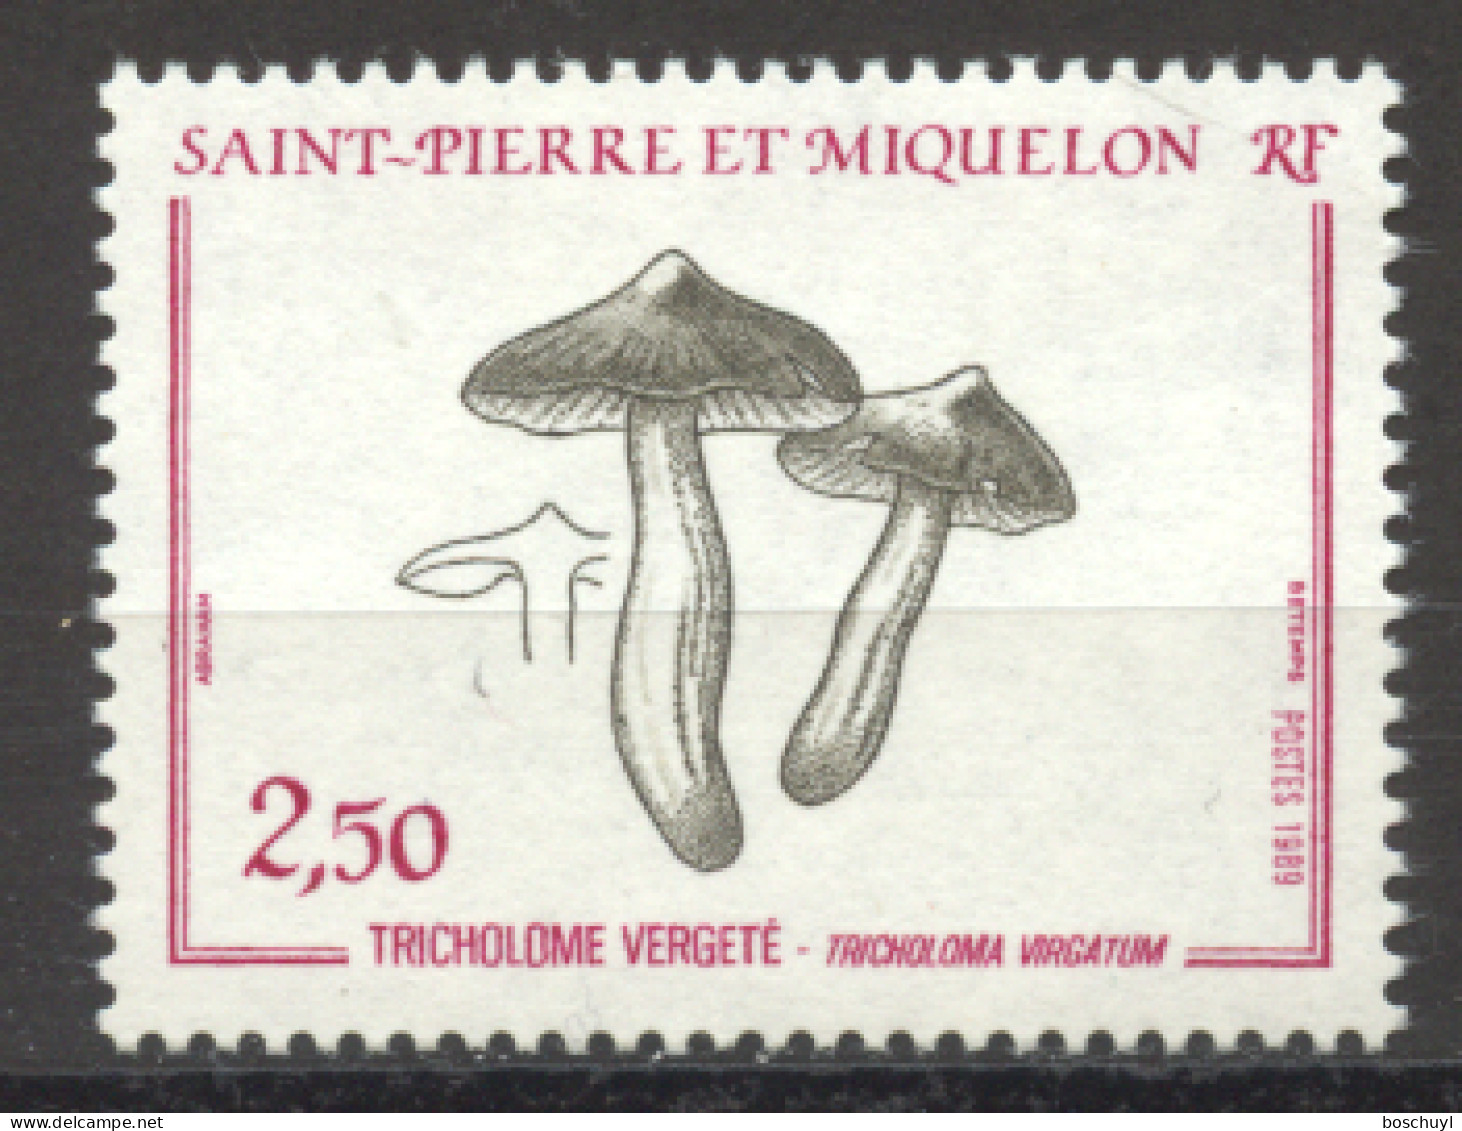 St Pierre And Miquelon, 1989, Mushroom, MNH, Michel 569 - Nuovi